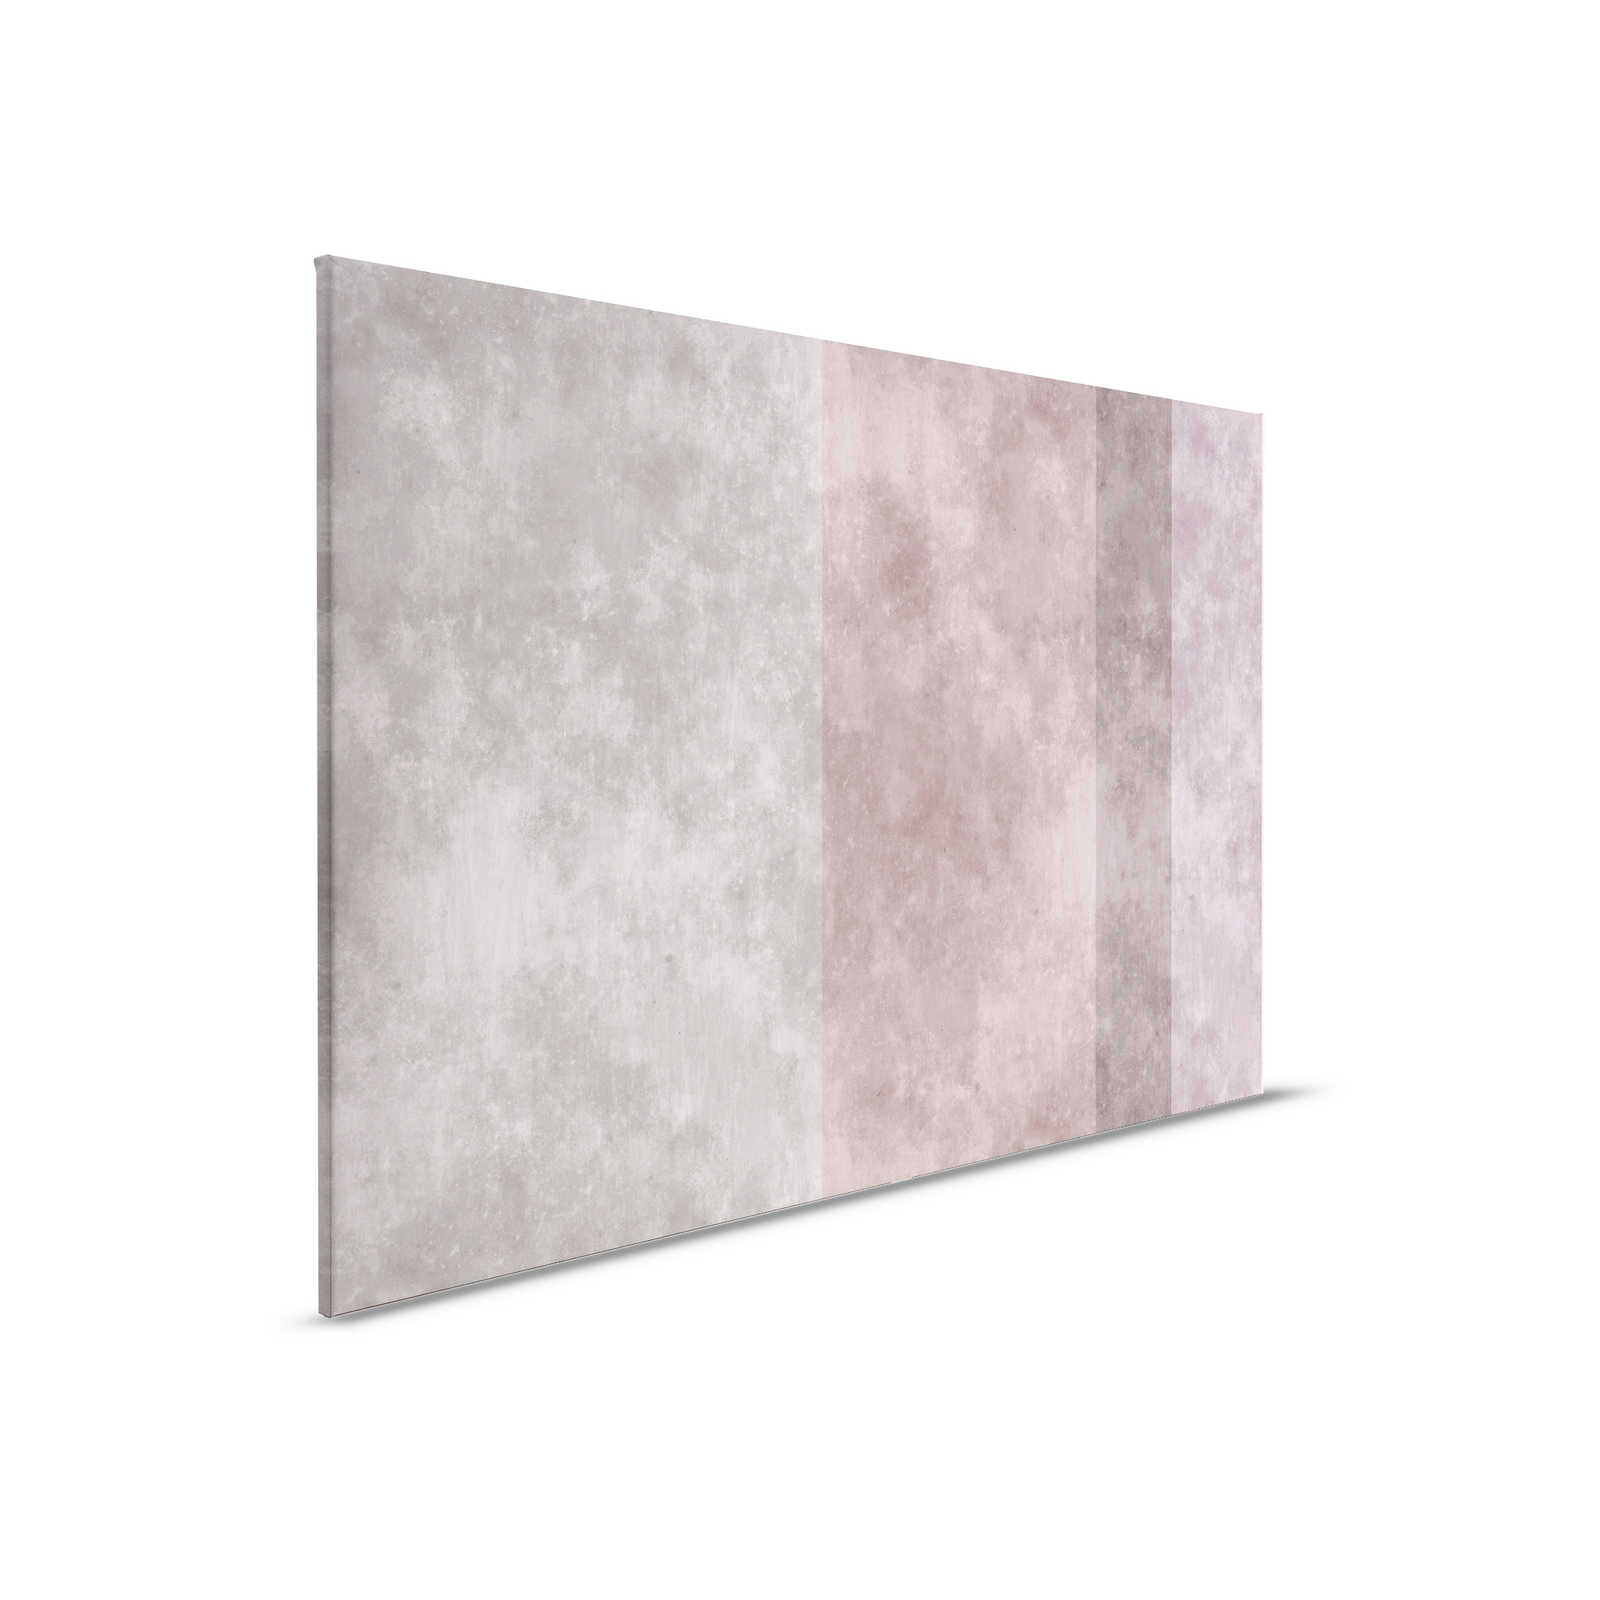         Betonoptik Leinwandbild mit Streifen | grau, rosa – 0,90 m x 0,60 m
    